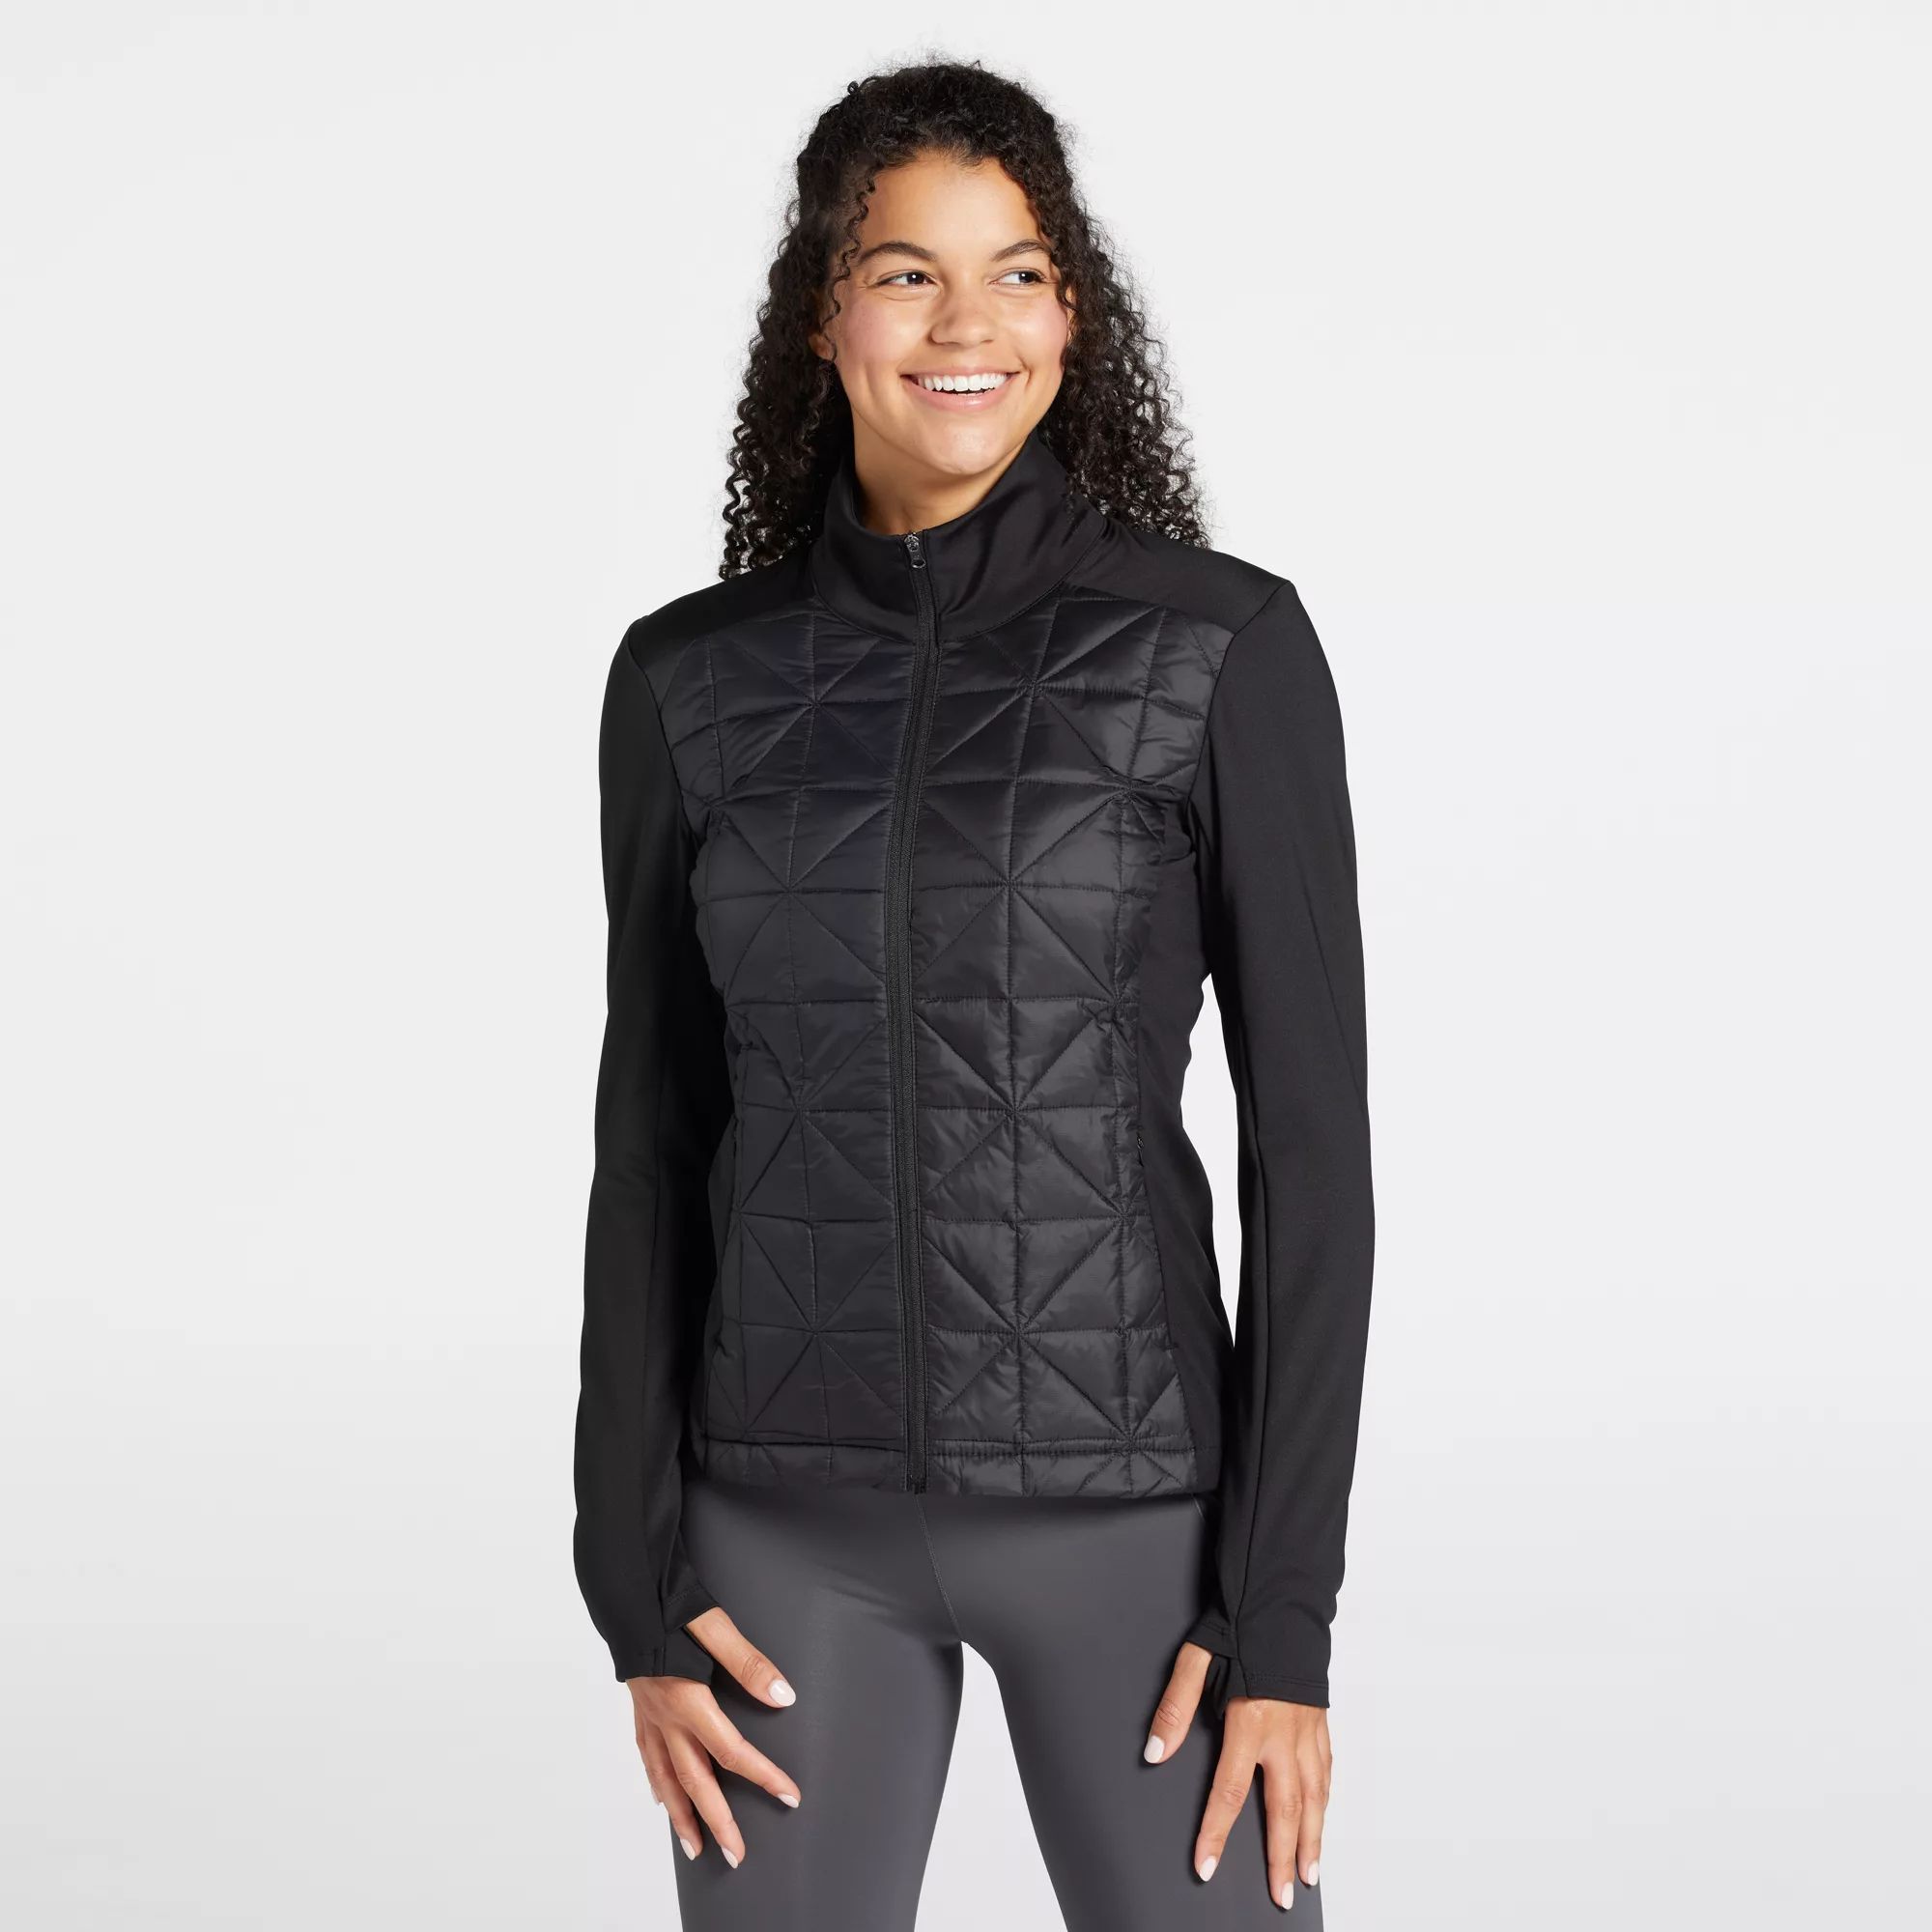 CALIA Women's Quilted Hybrid Full Zip Golf Jacket, Medium, Pure Black | Dick's Sporting Goods